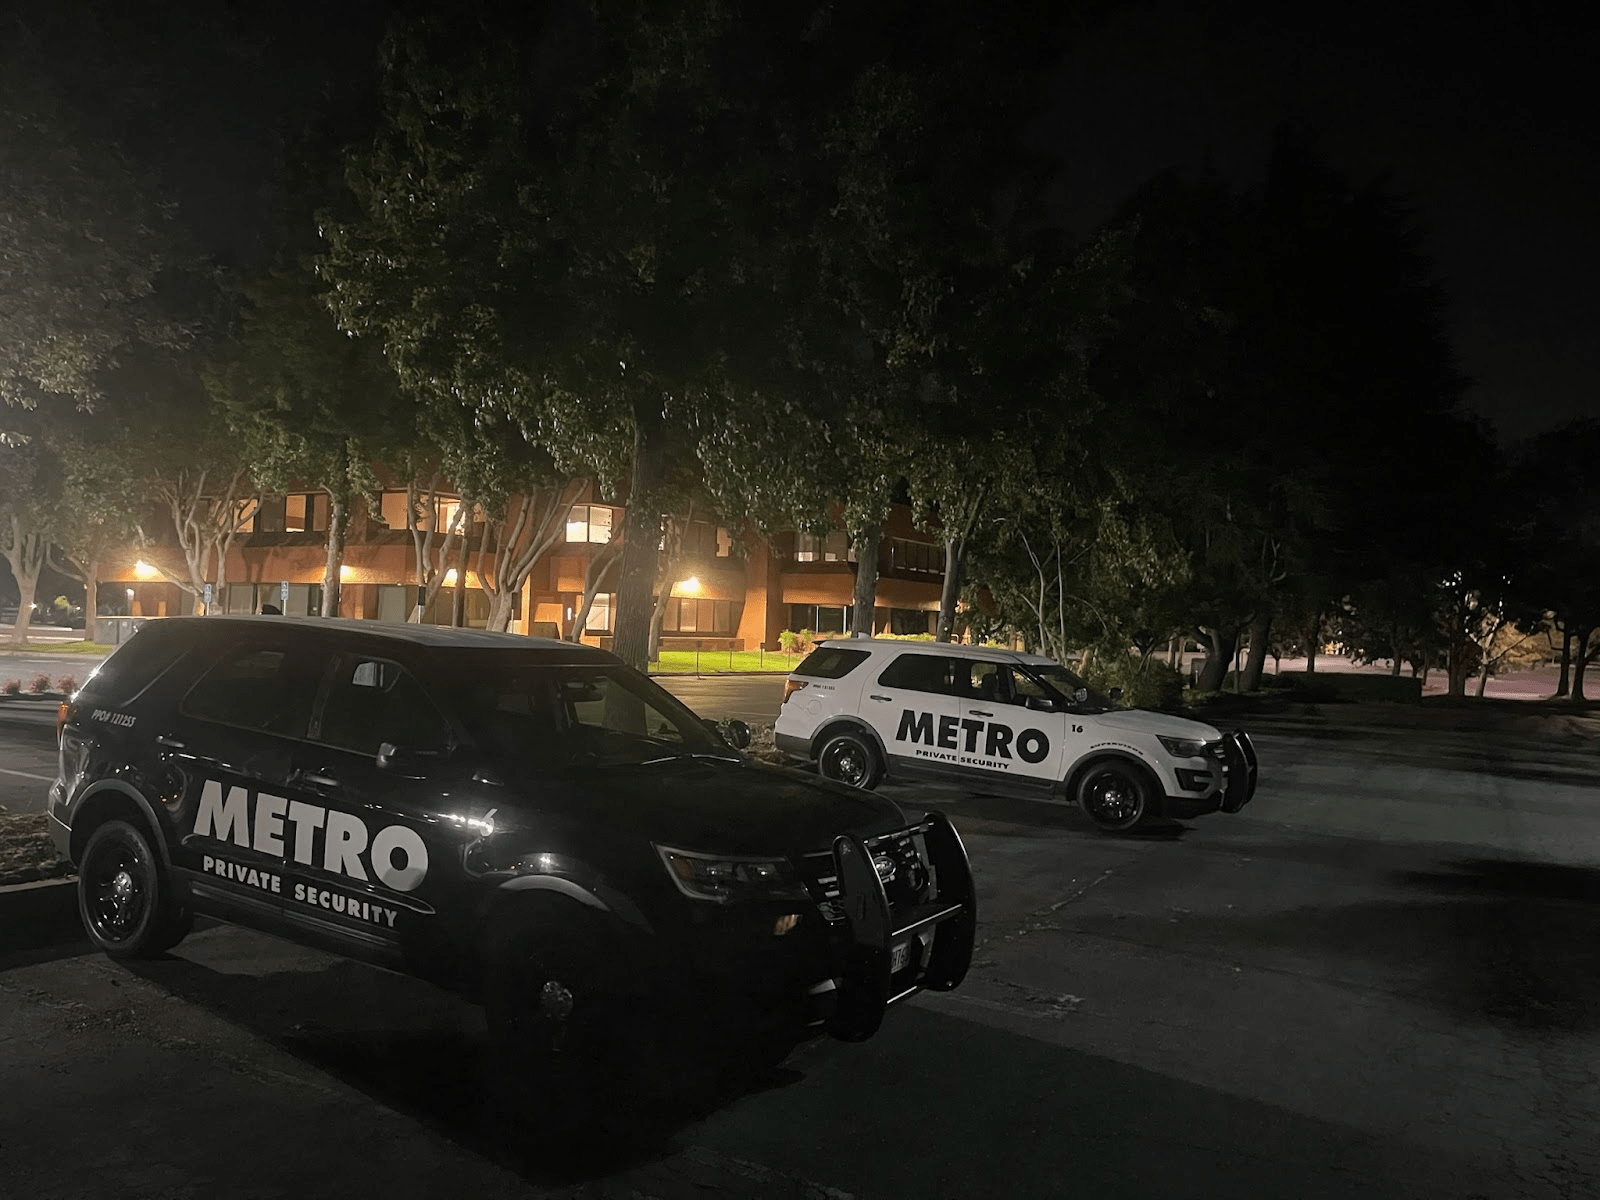 metro security services patrol , parking lot security california , parking lot security guard california